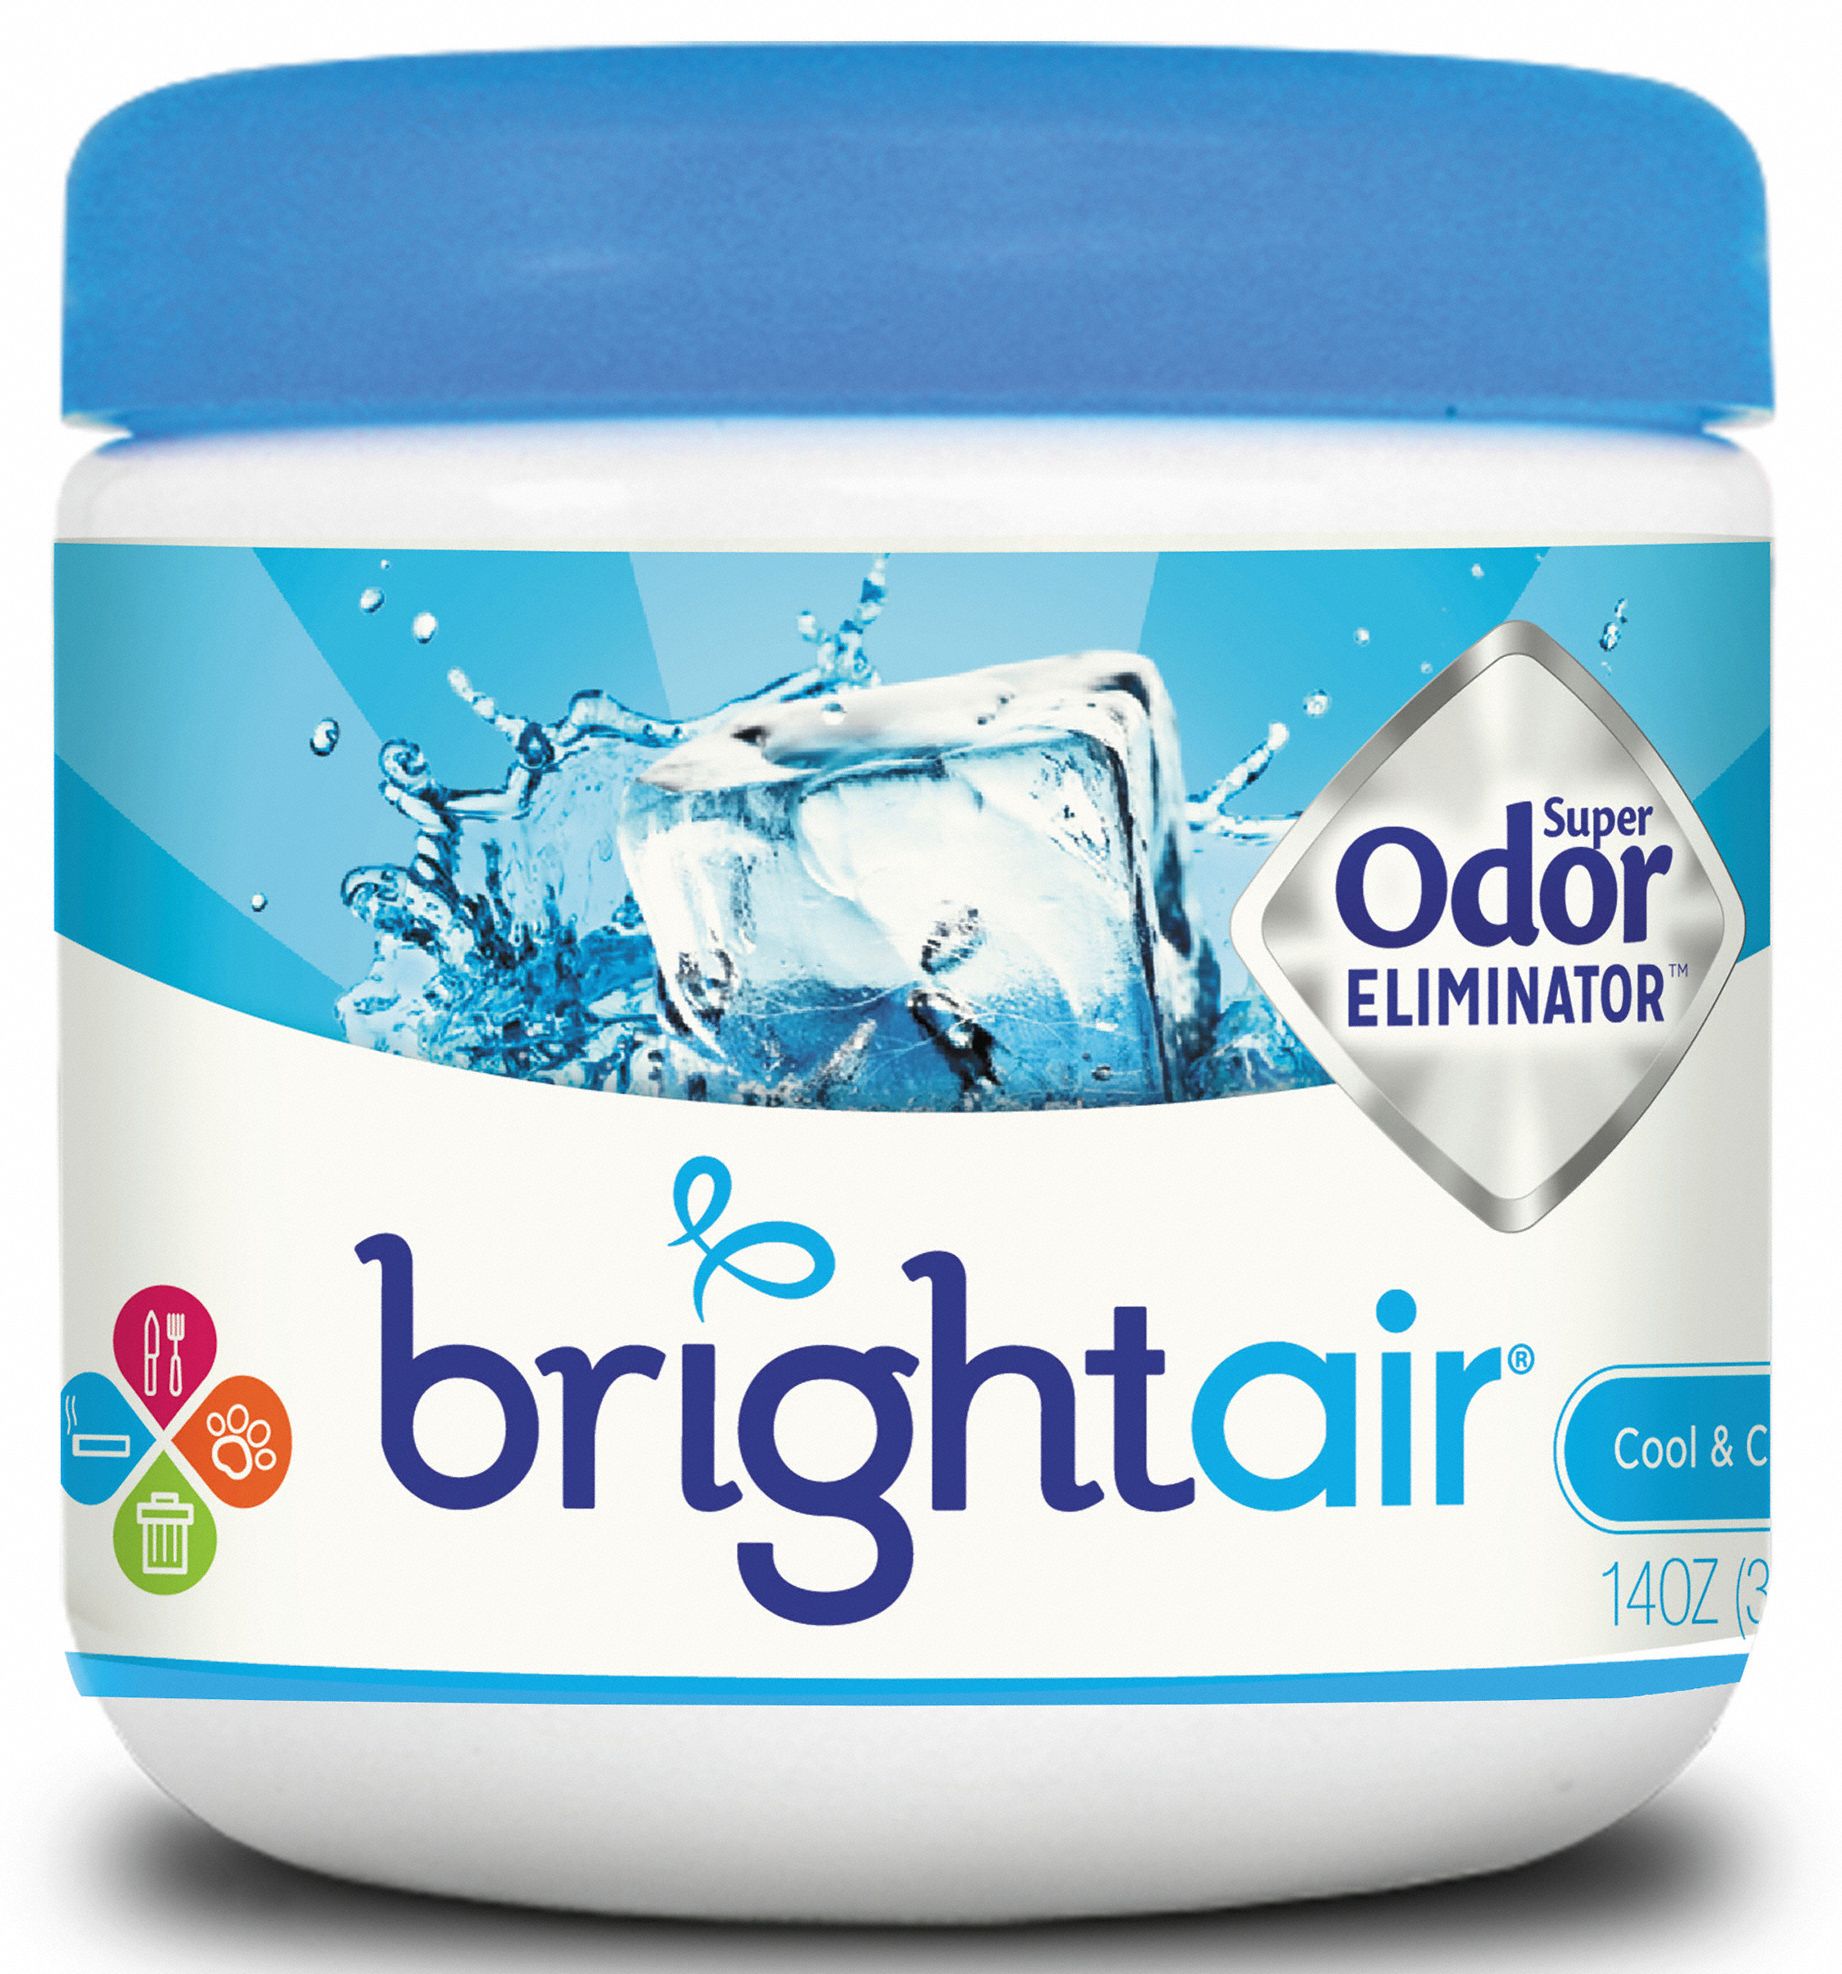 Deodorizer: Odor Eliminators, Jar, 14 oz Container Size, Gel, Ready to Use, Blue, 6 PK